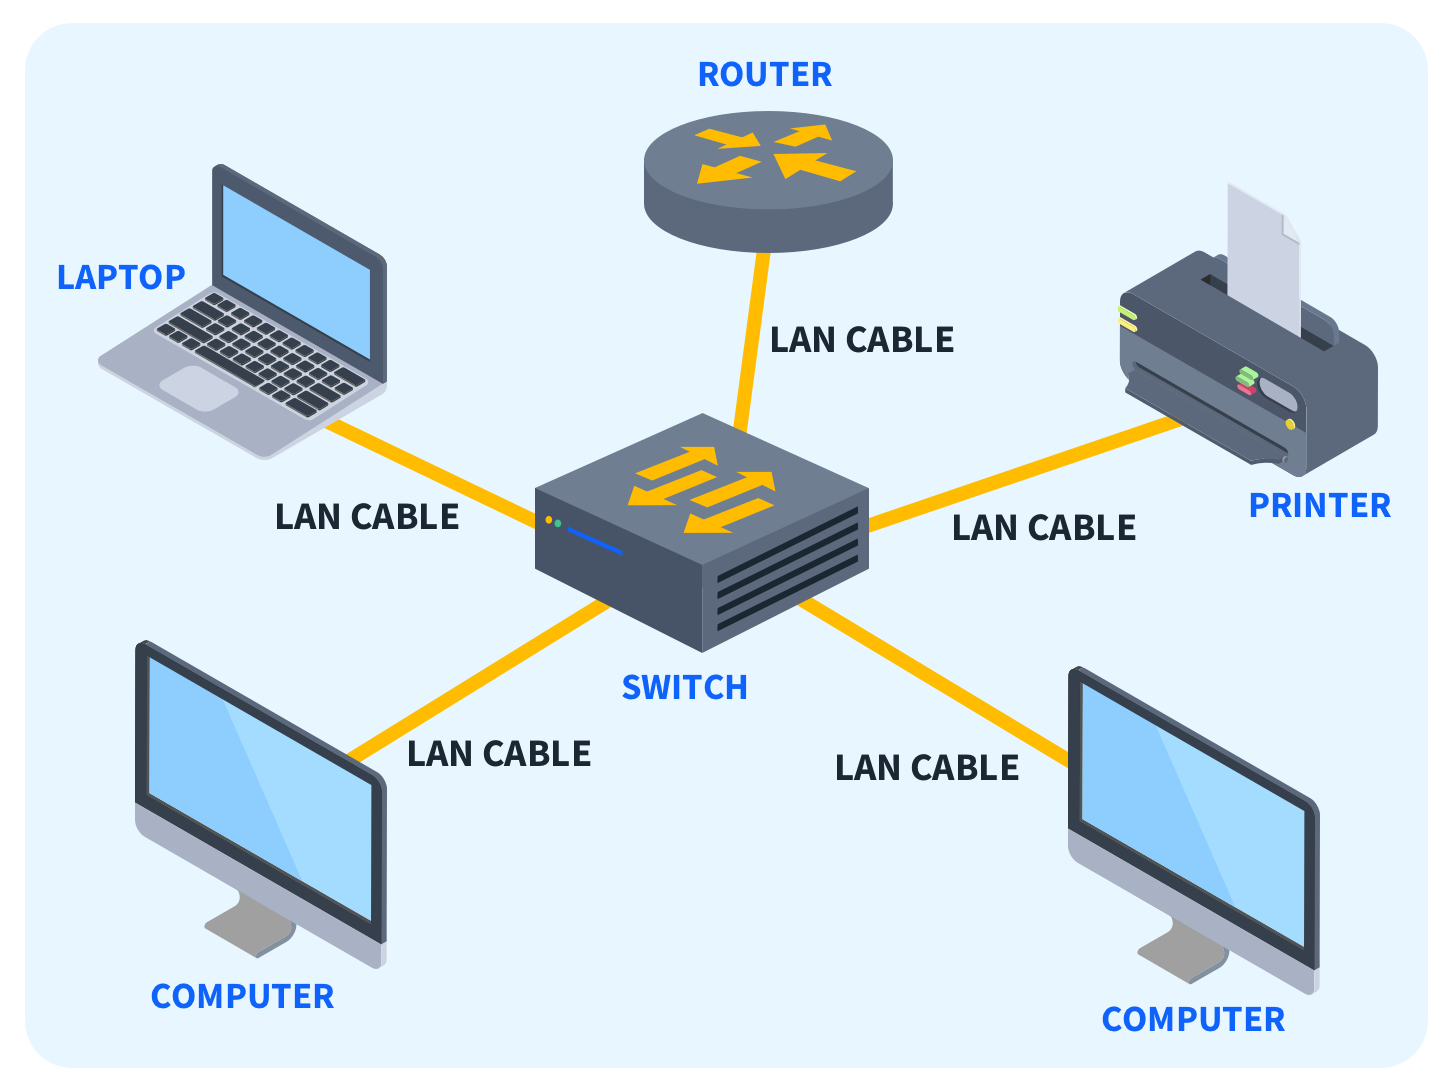 Definition of LAN switch